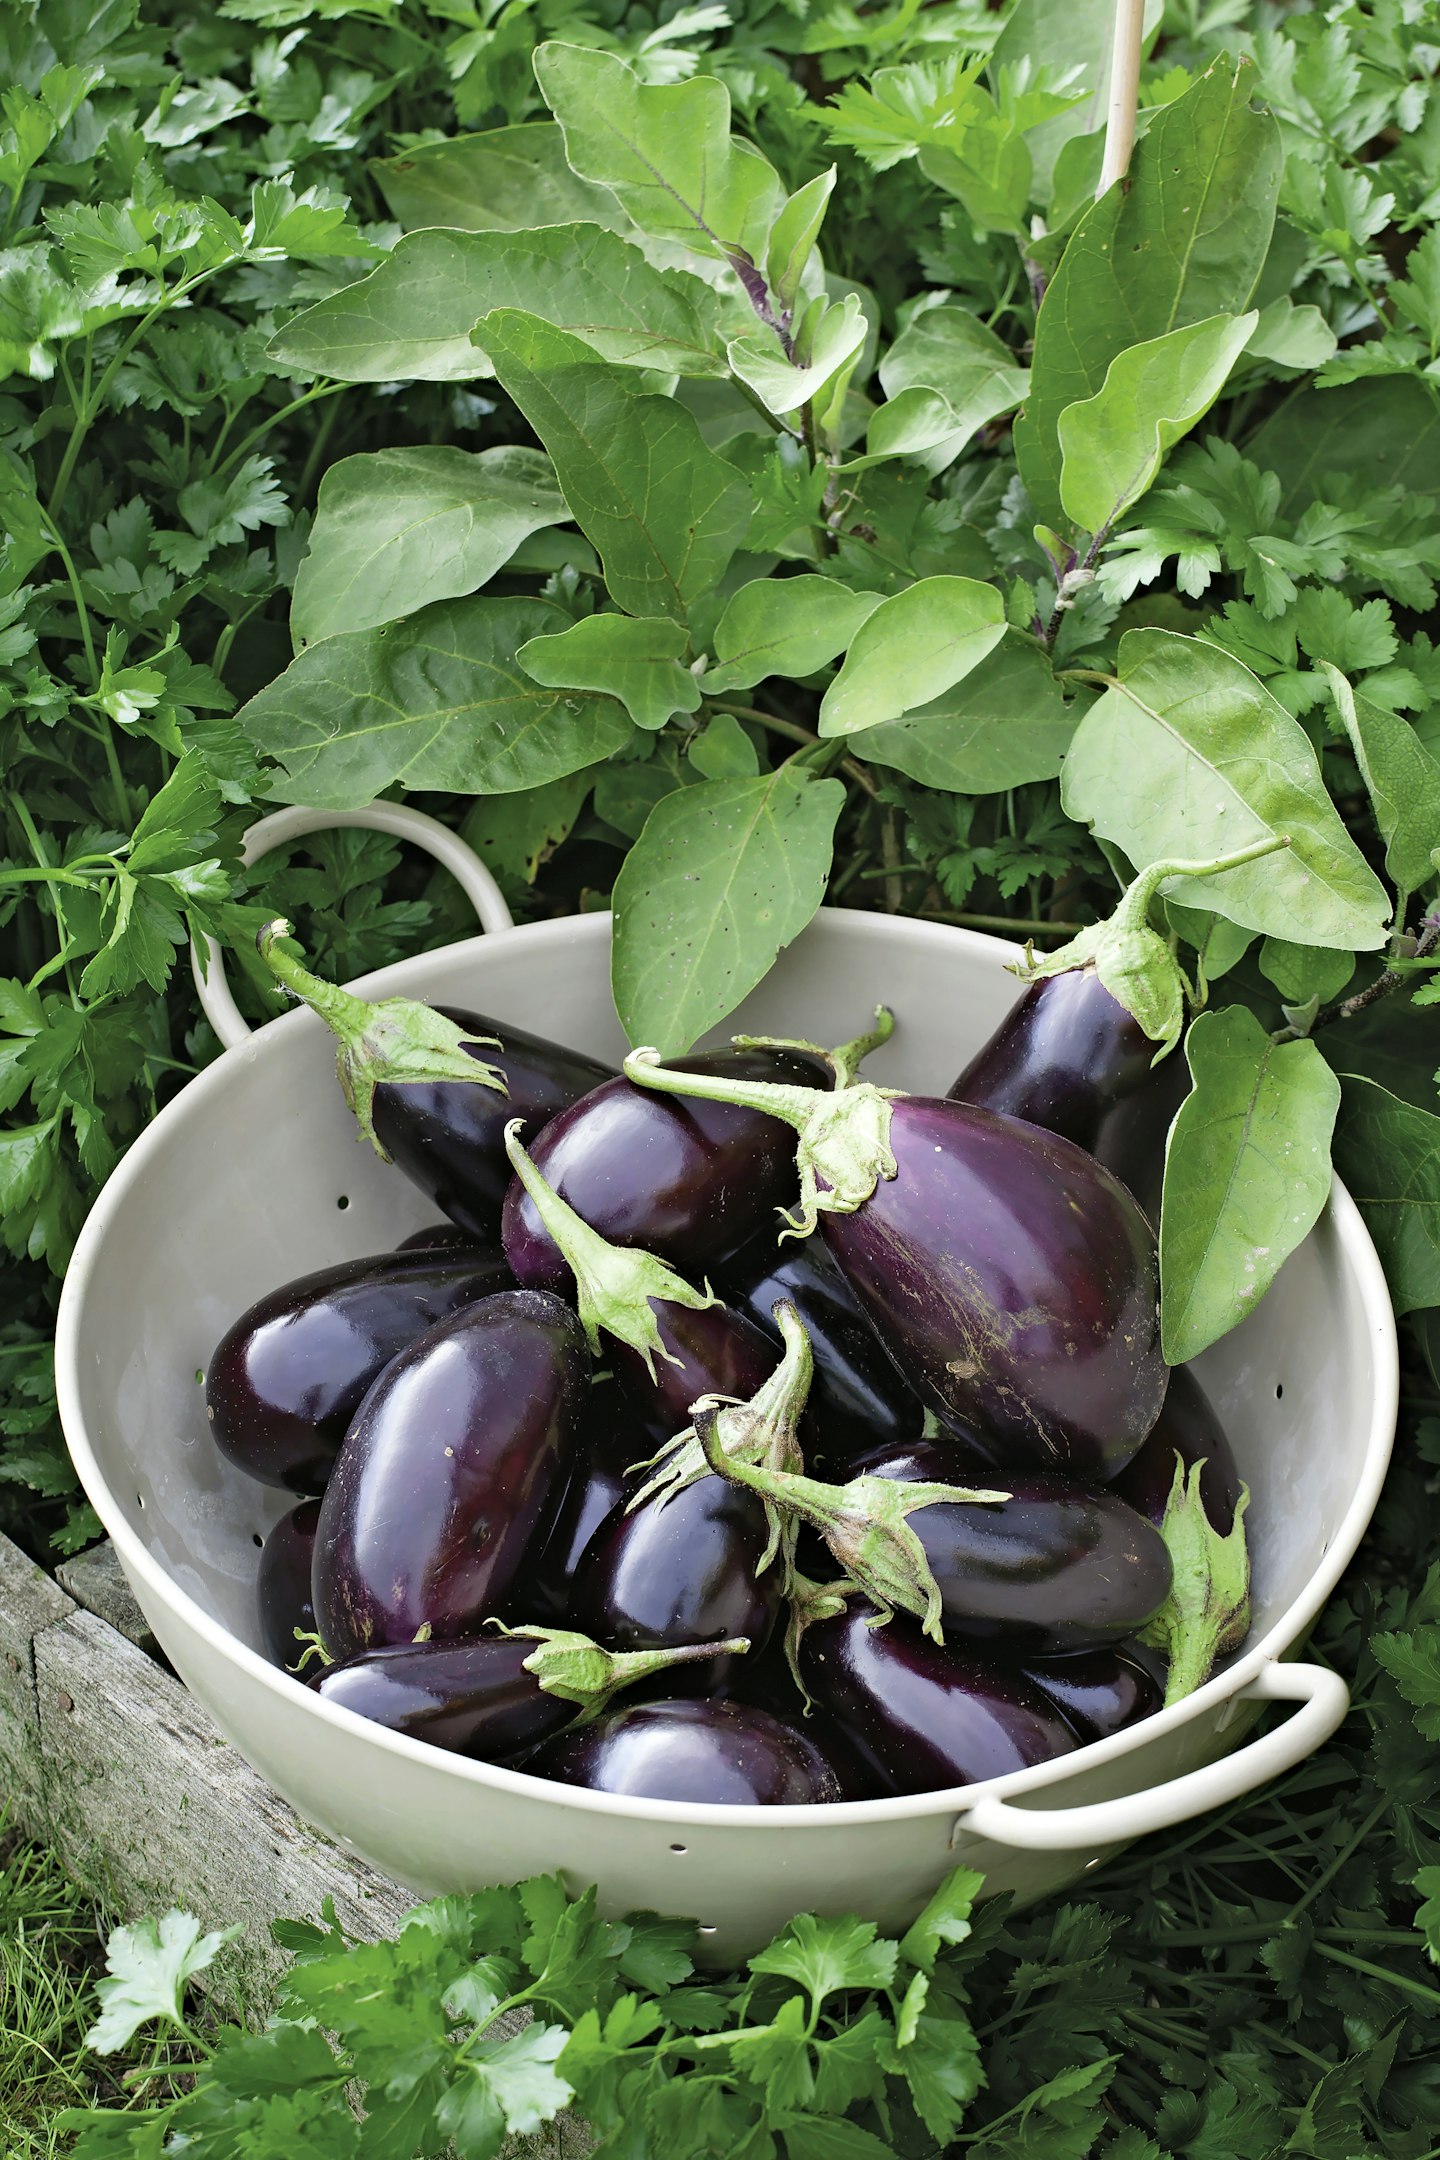 aubergines in a bowl in a garden